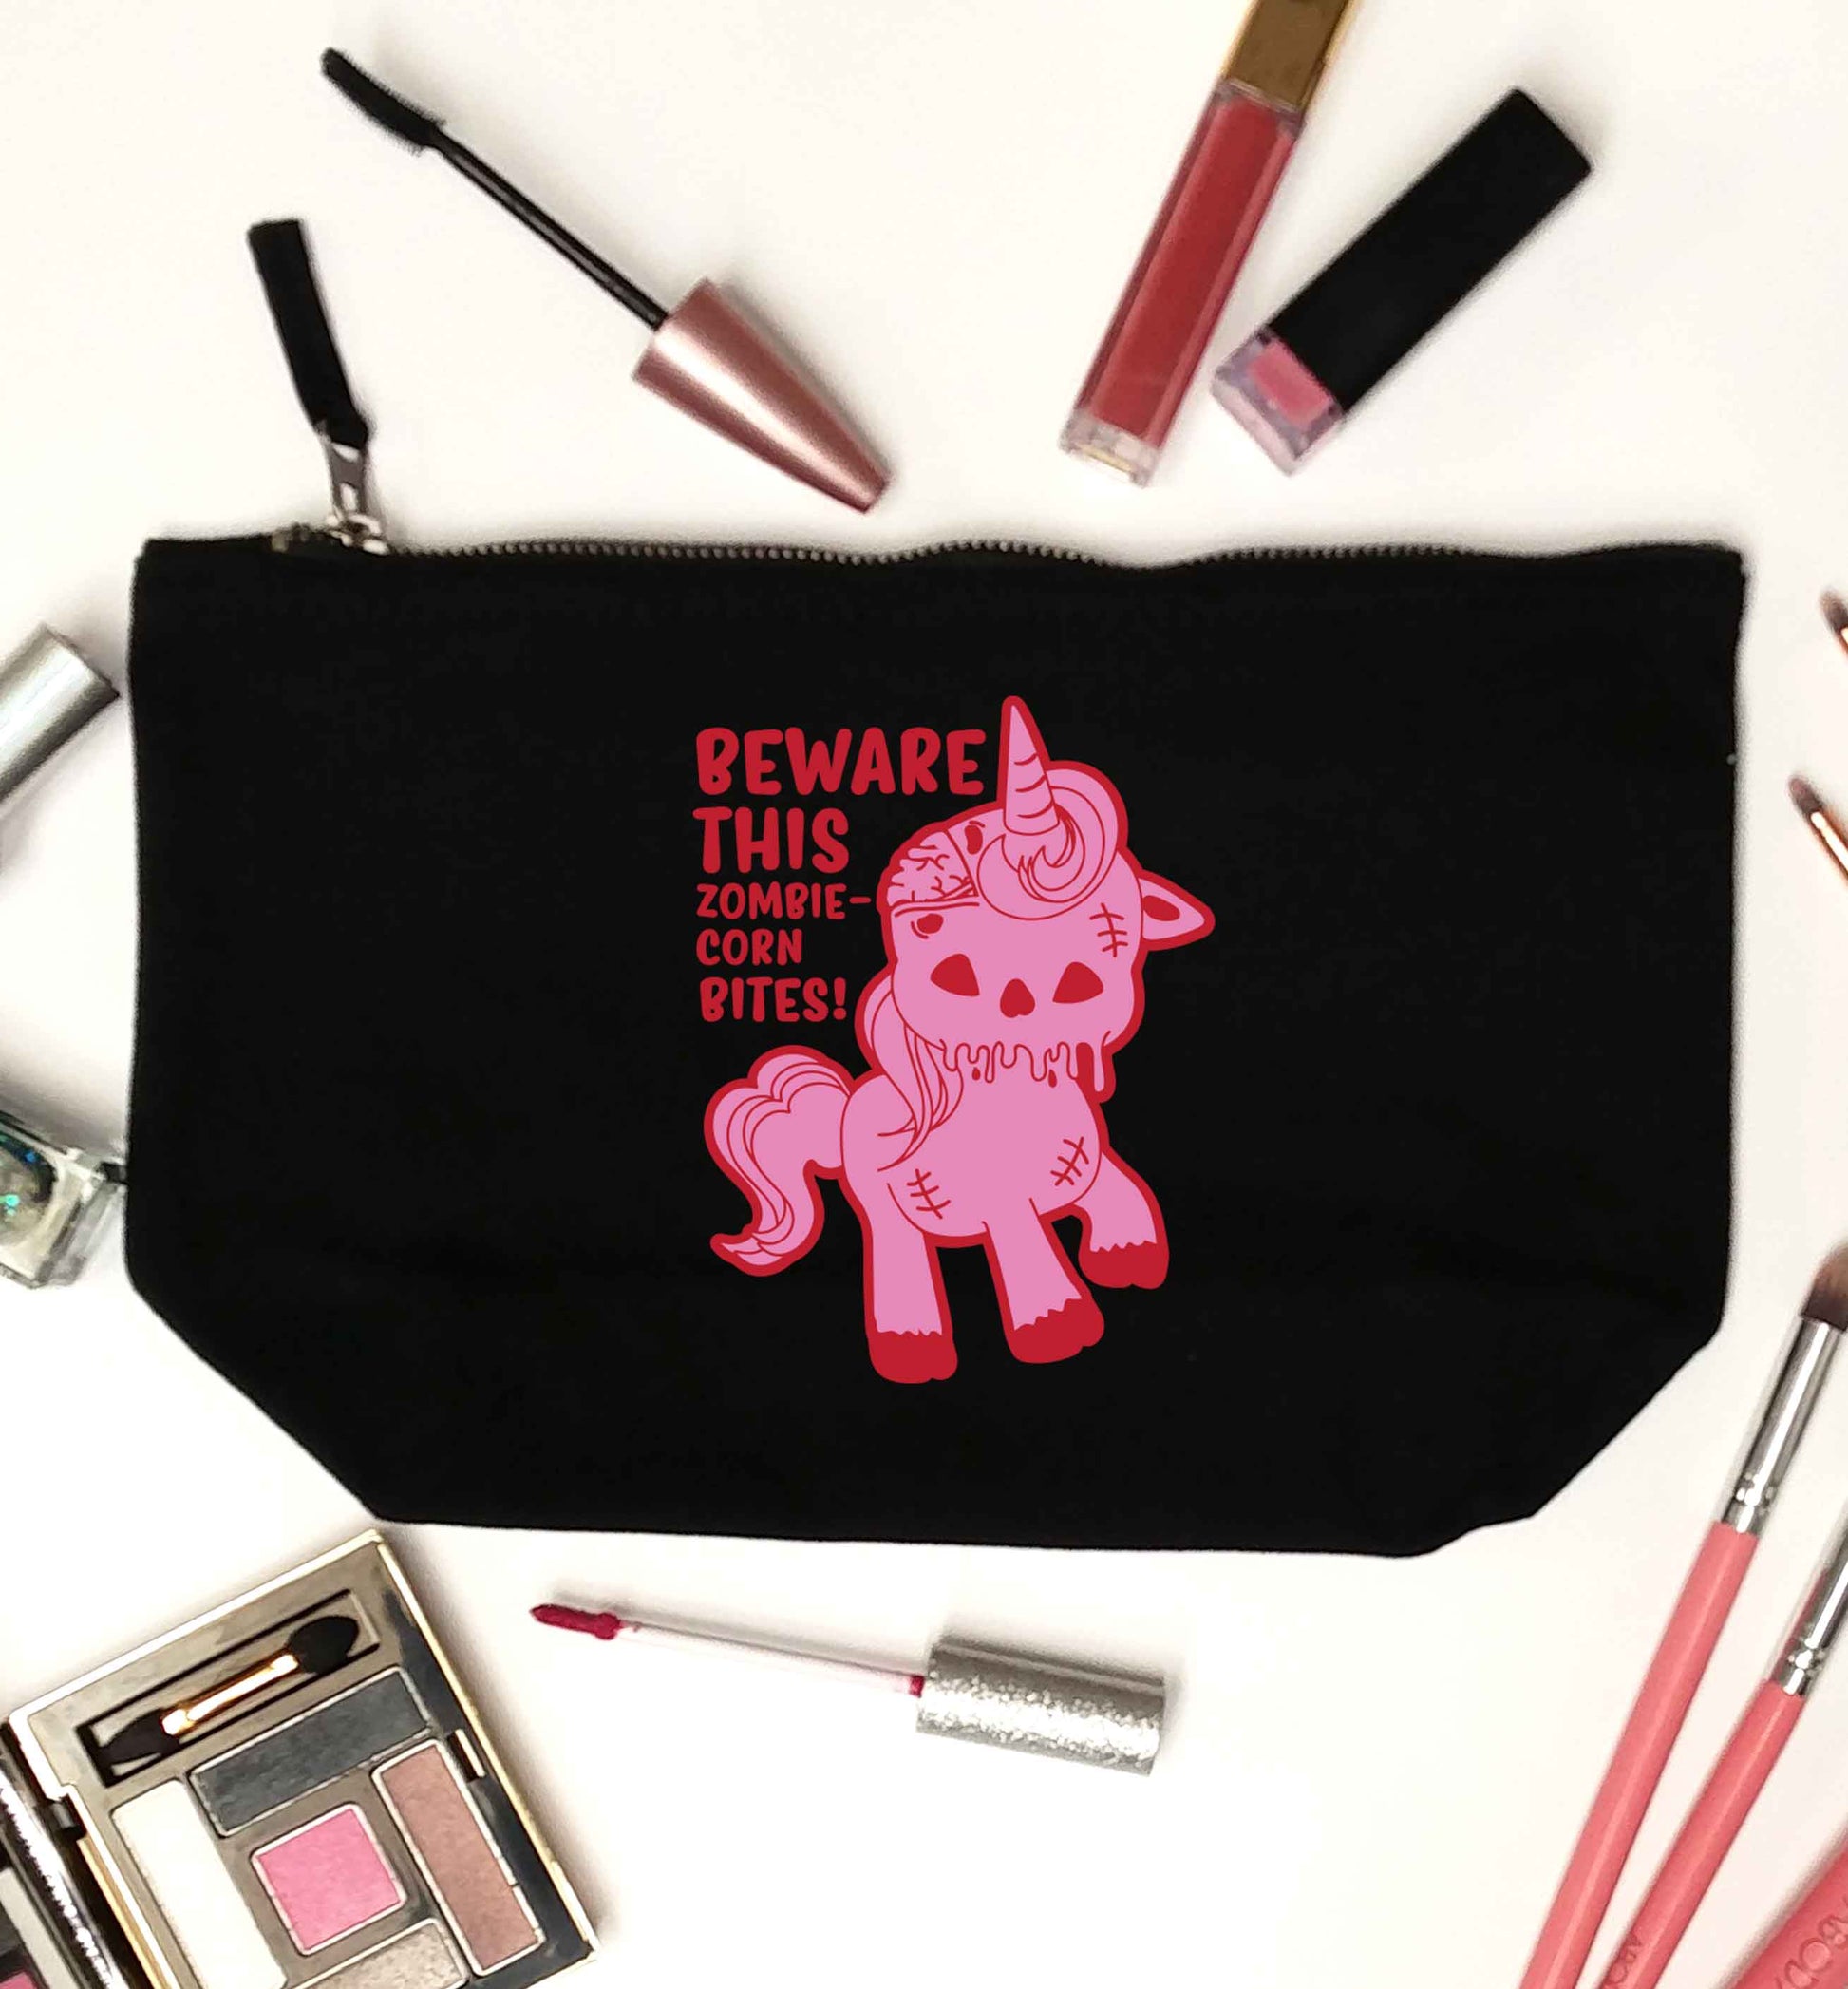 Beware this zombiecorn bites black makeup bag